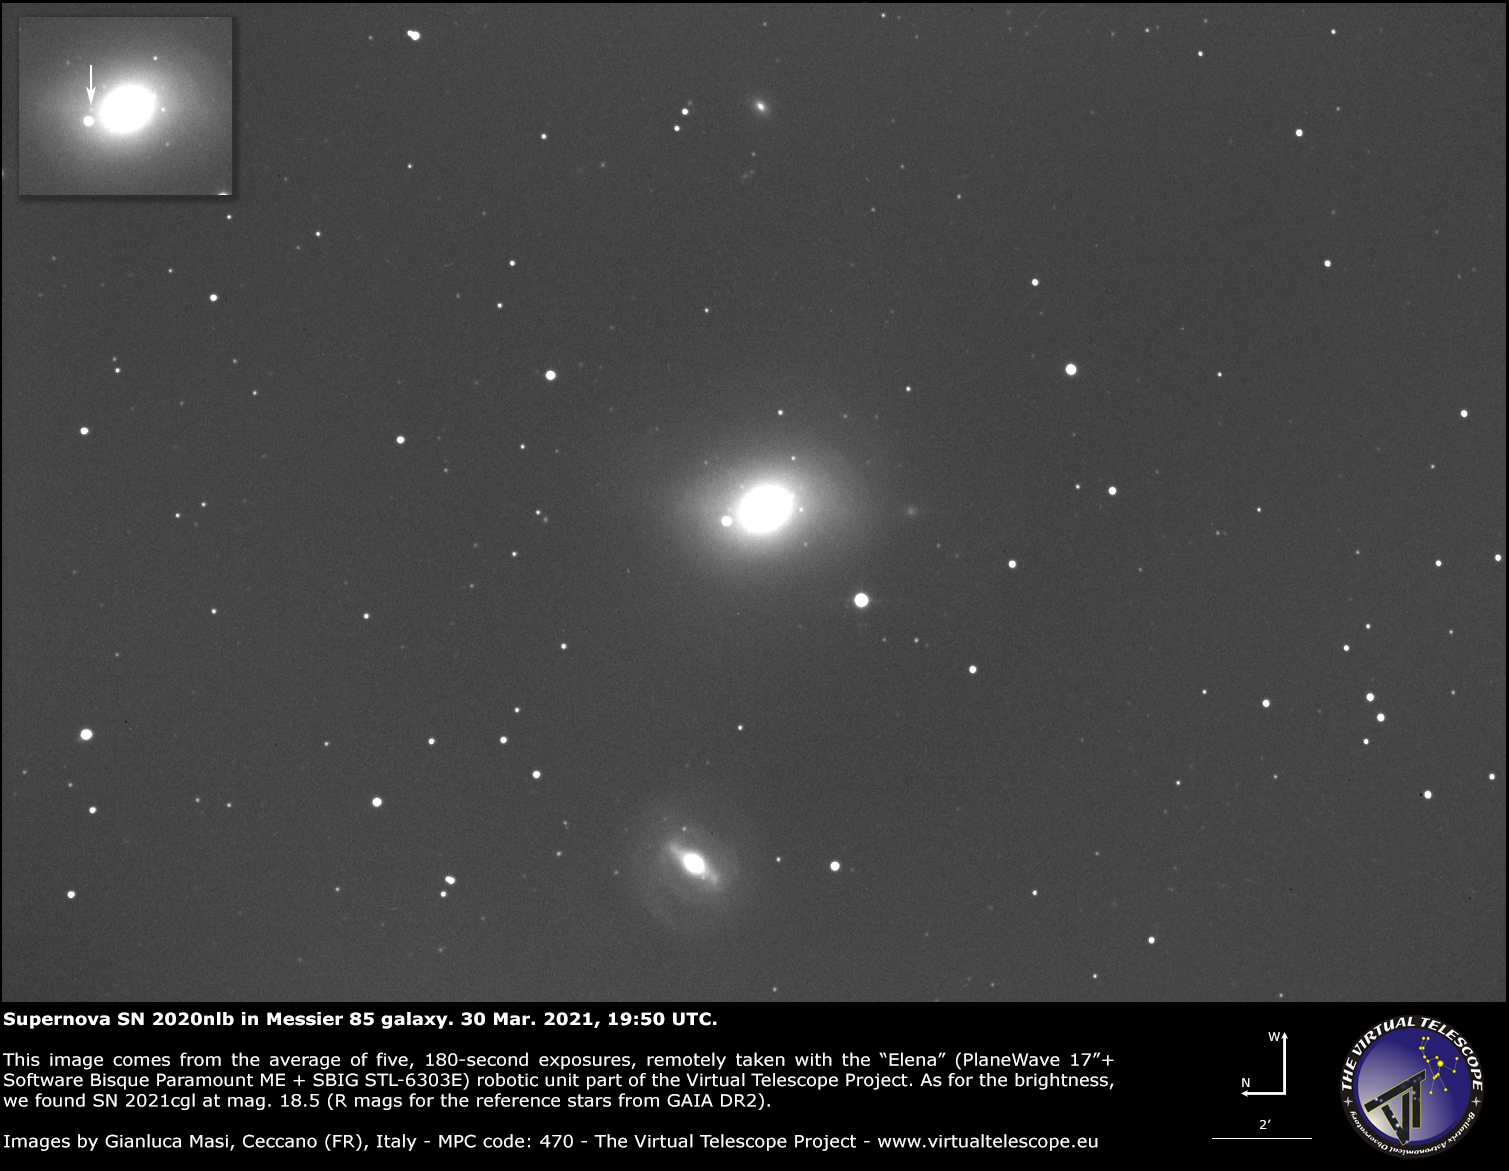 Supernova SN 2020nlb in Messier 85: an image - 30 Mar. 2021.